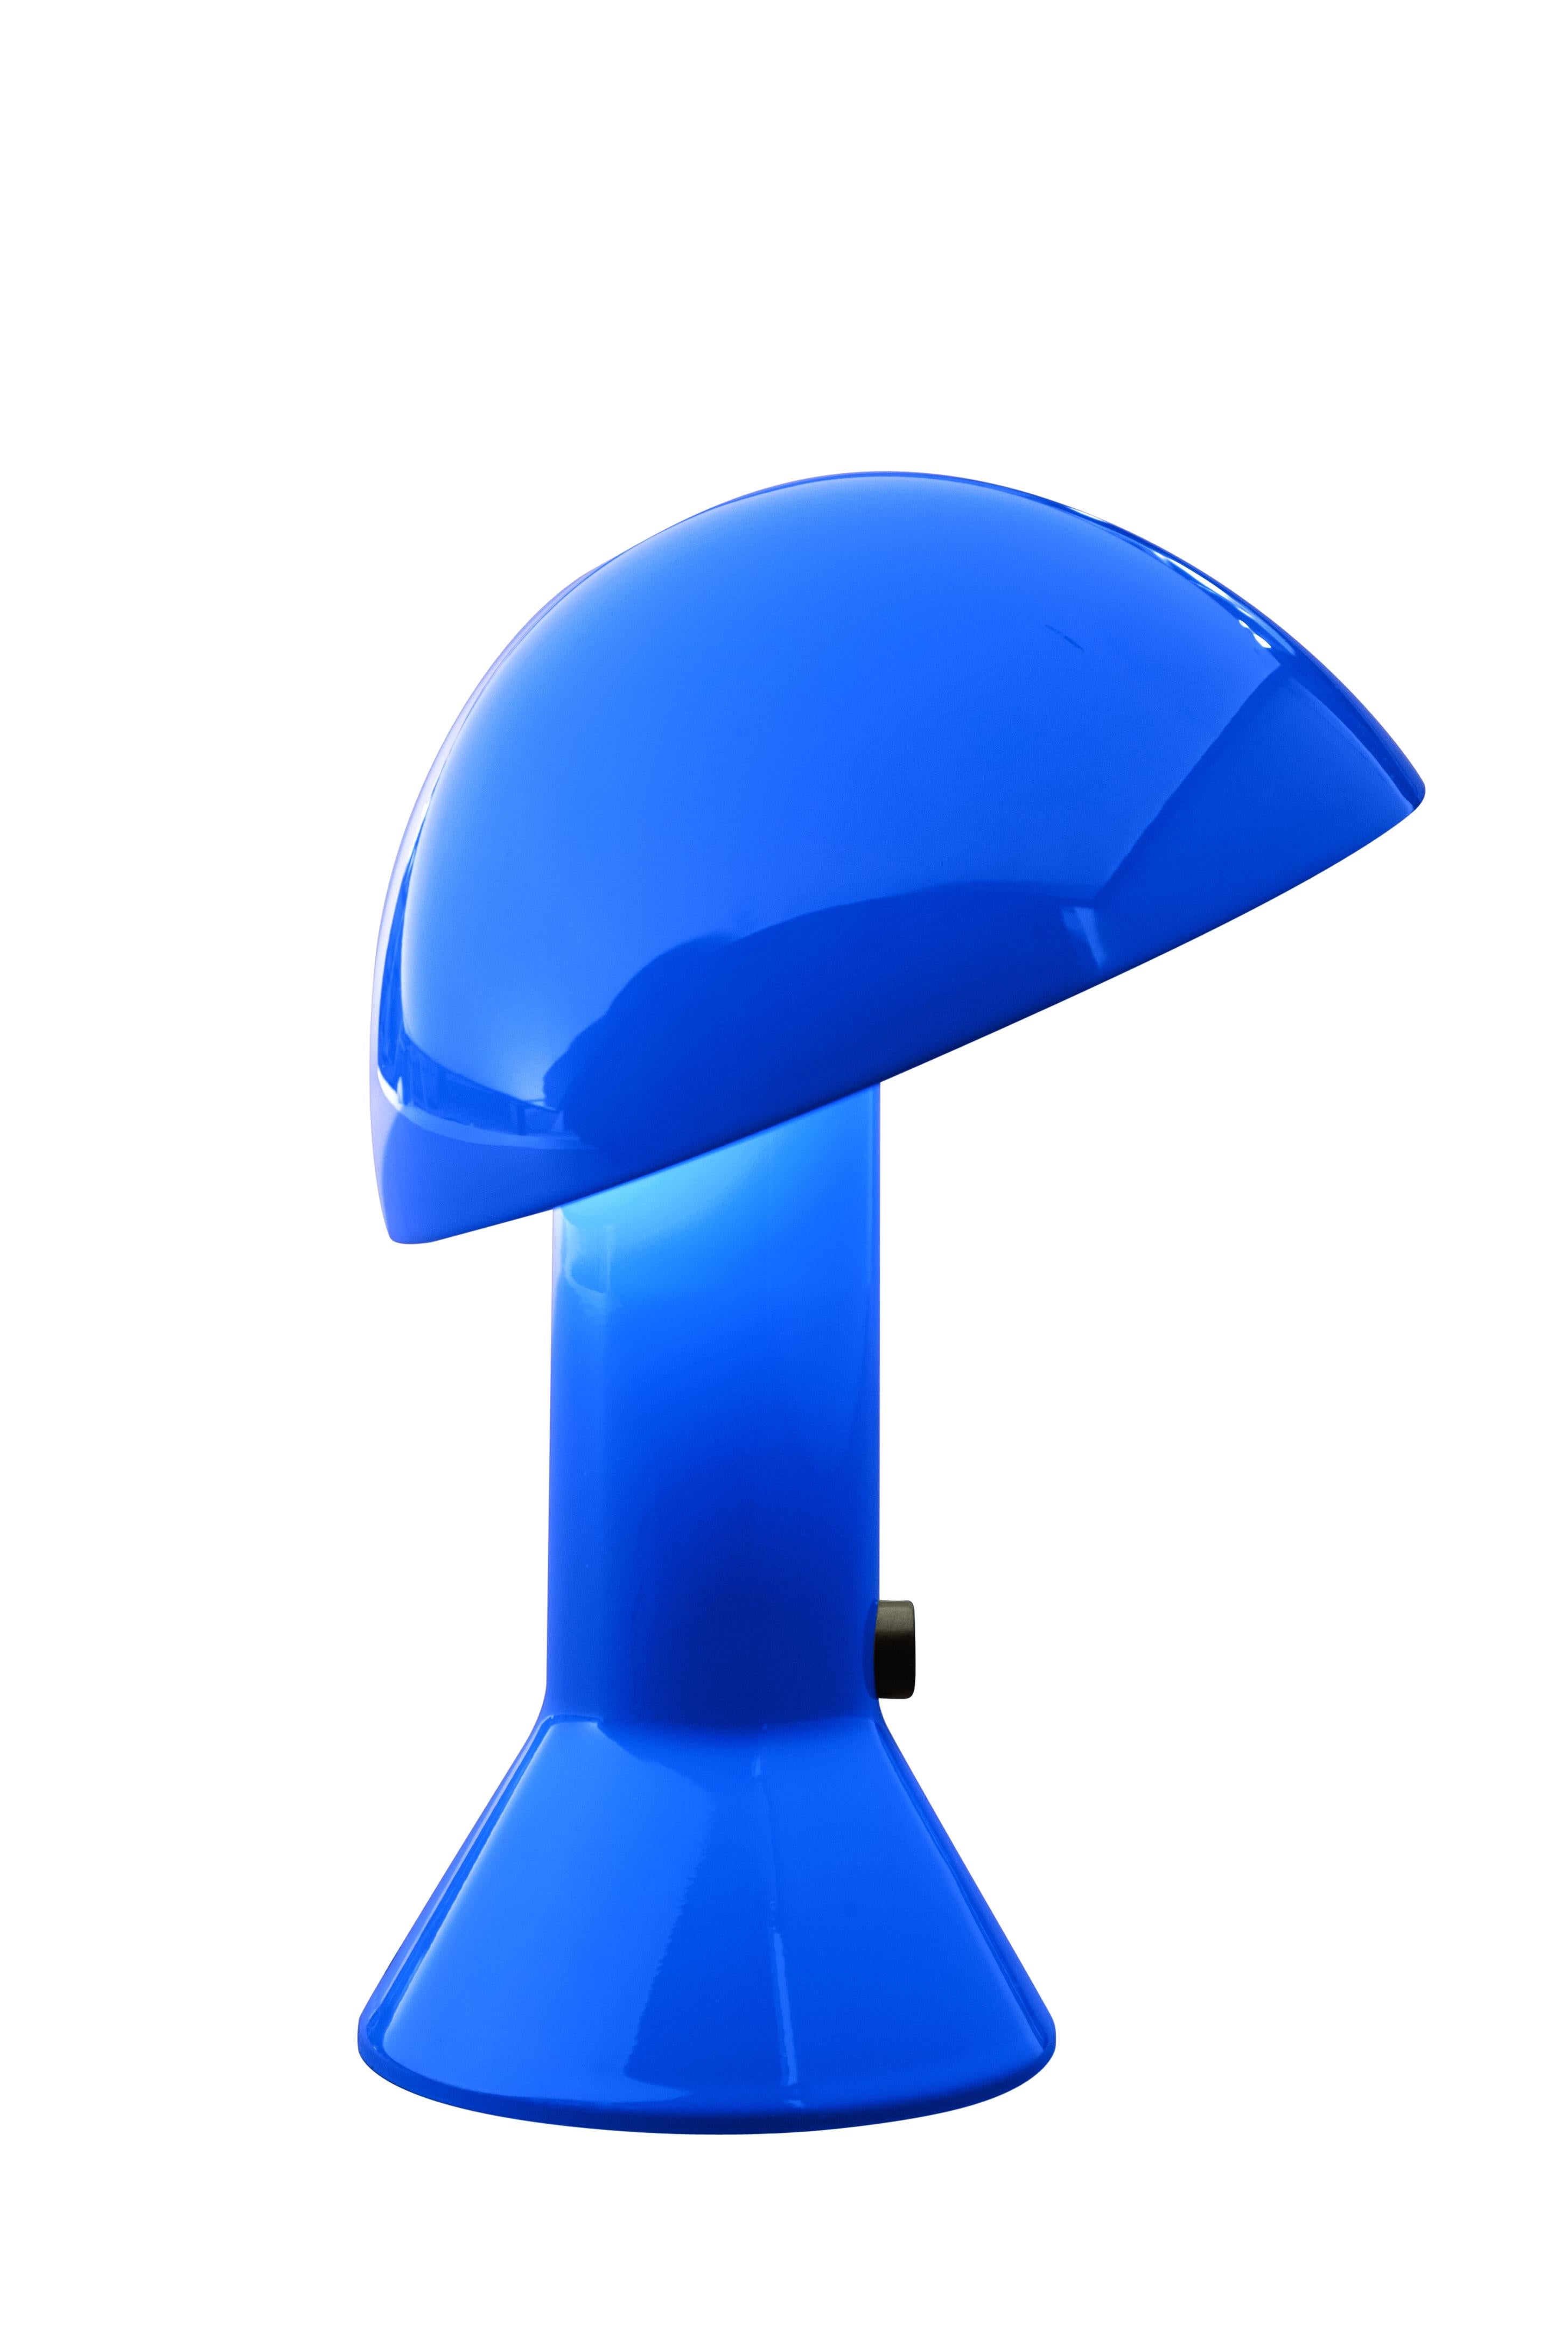 For Sale: Blue Martinelli Luce Elmetto 685 Table Lamp by Elio Martinelli